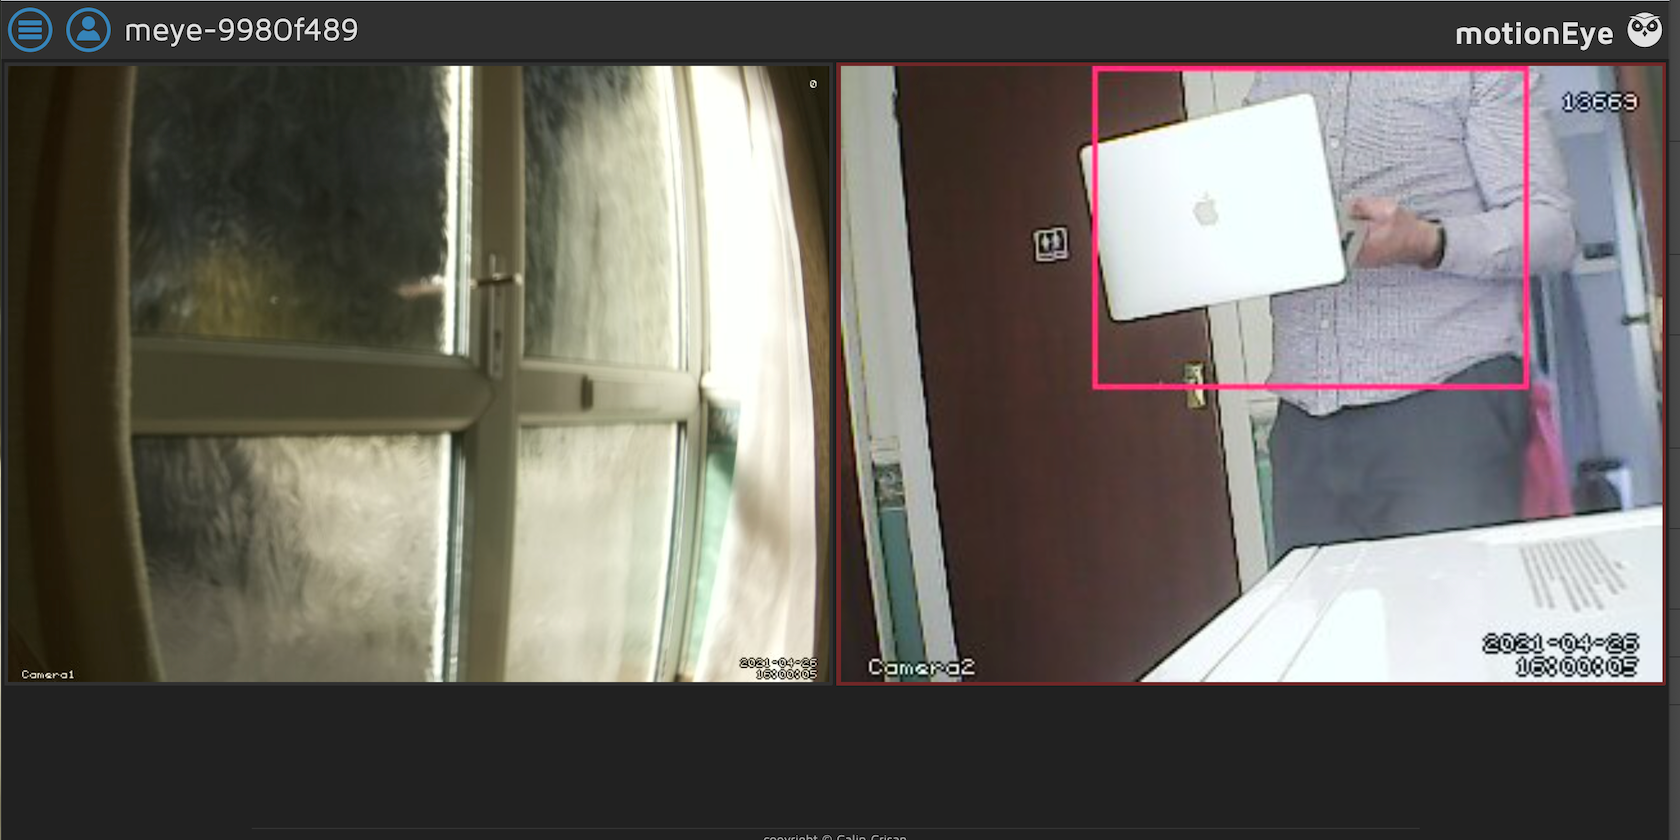 Raspberry Pi motionEyeOS CCTV surveillance camera system